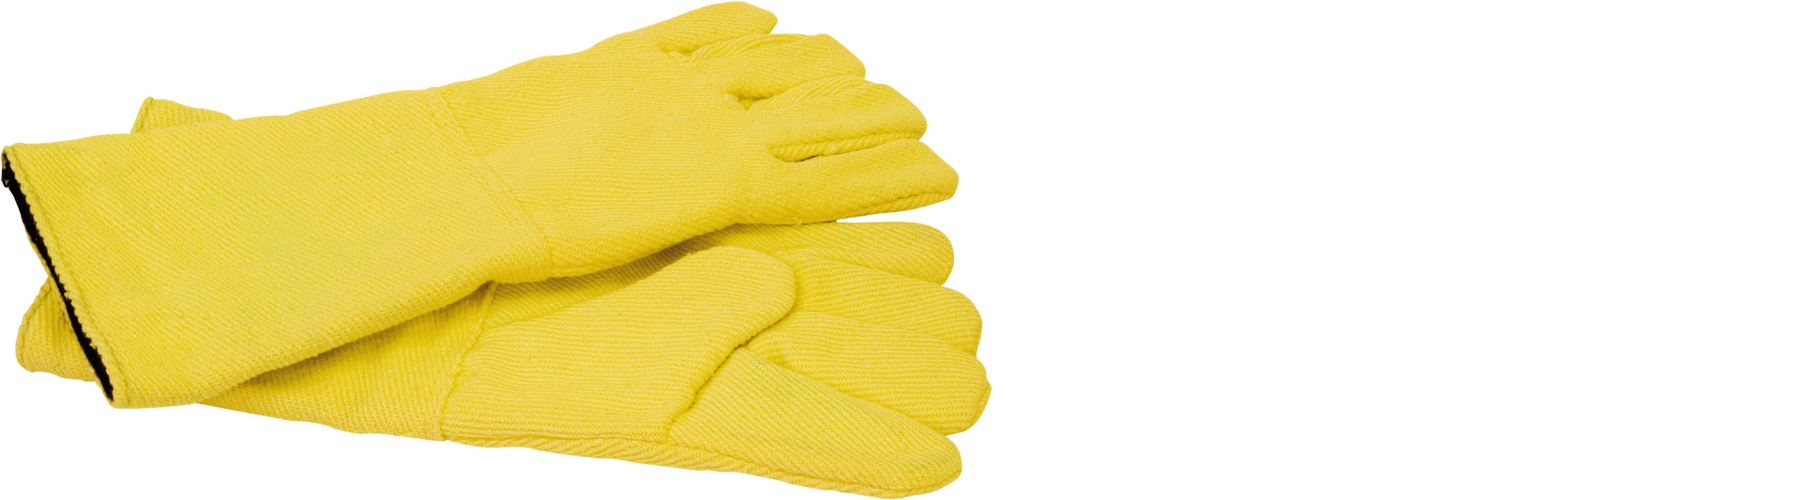 guantes protección contra calor